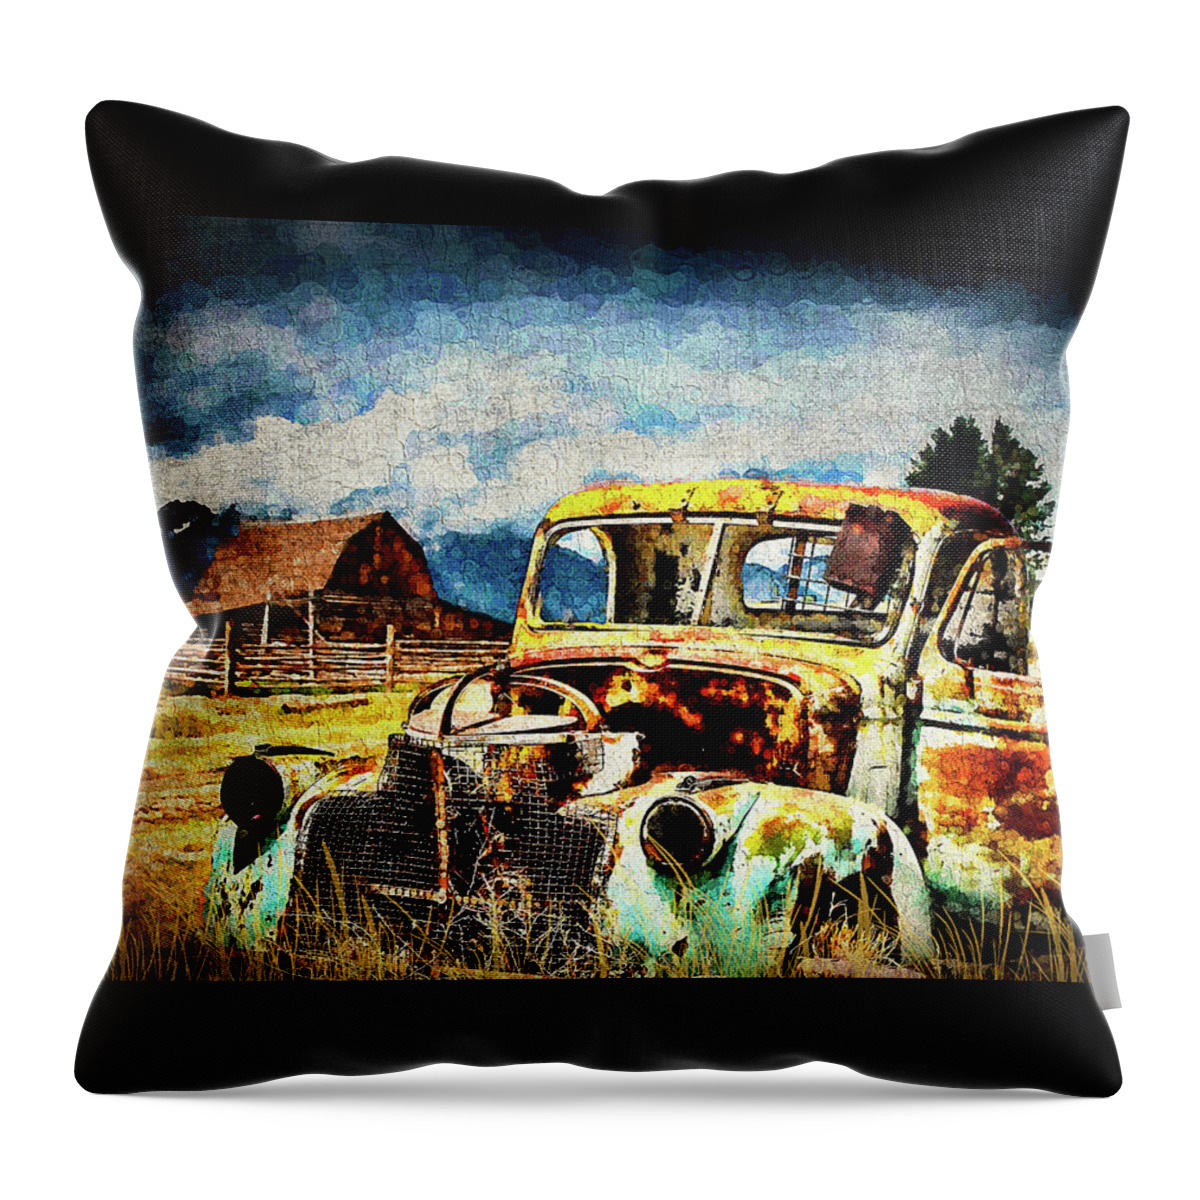 Truck Throw Pillow featuring the digital art Vintage by Mark Allen